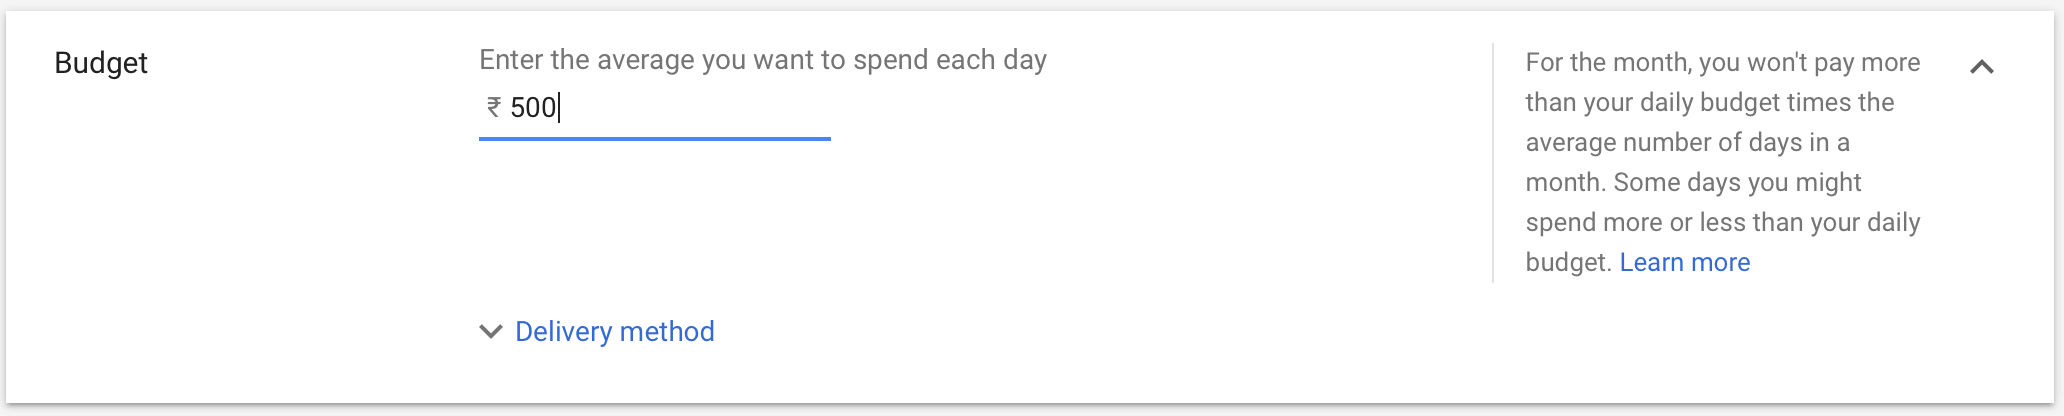 Budget Option in Google Ads